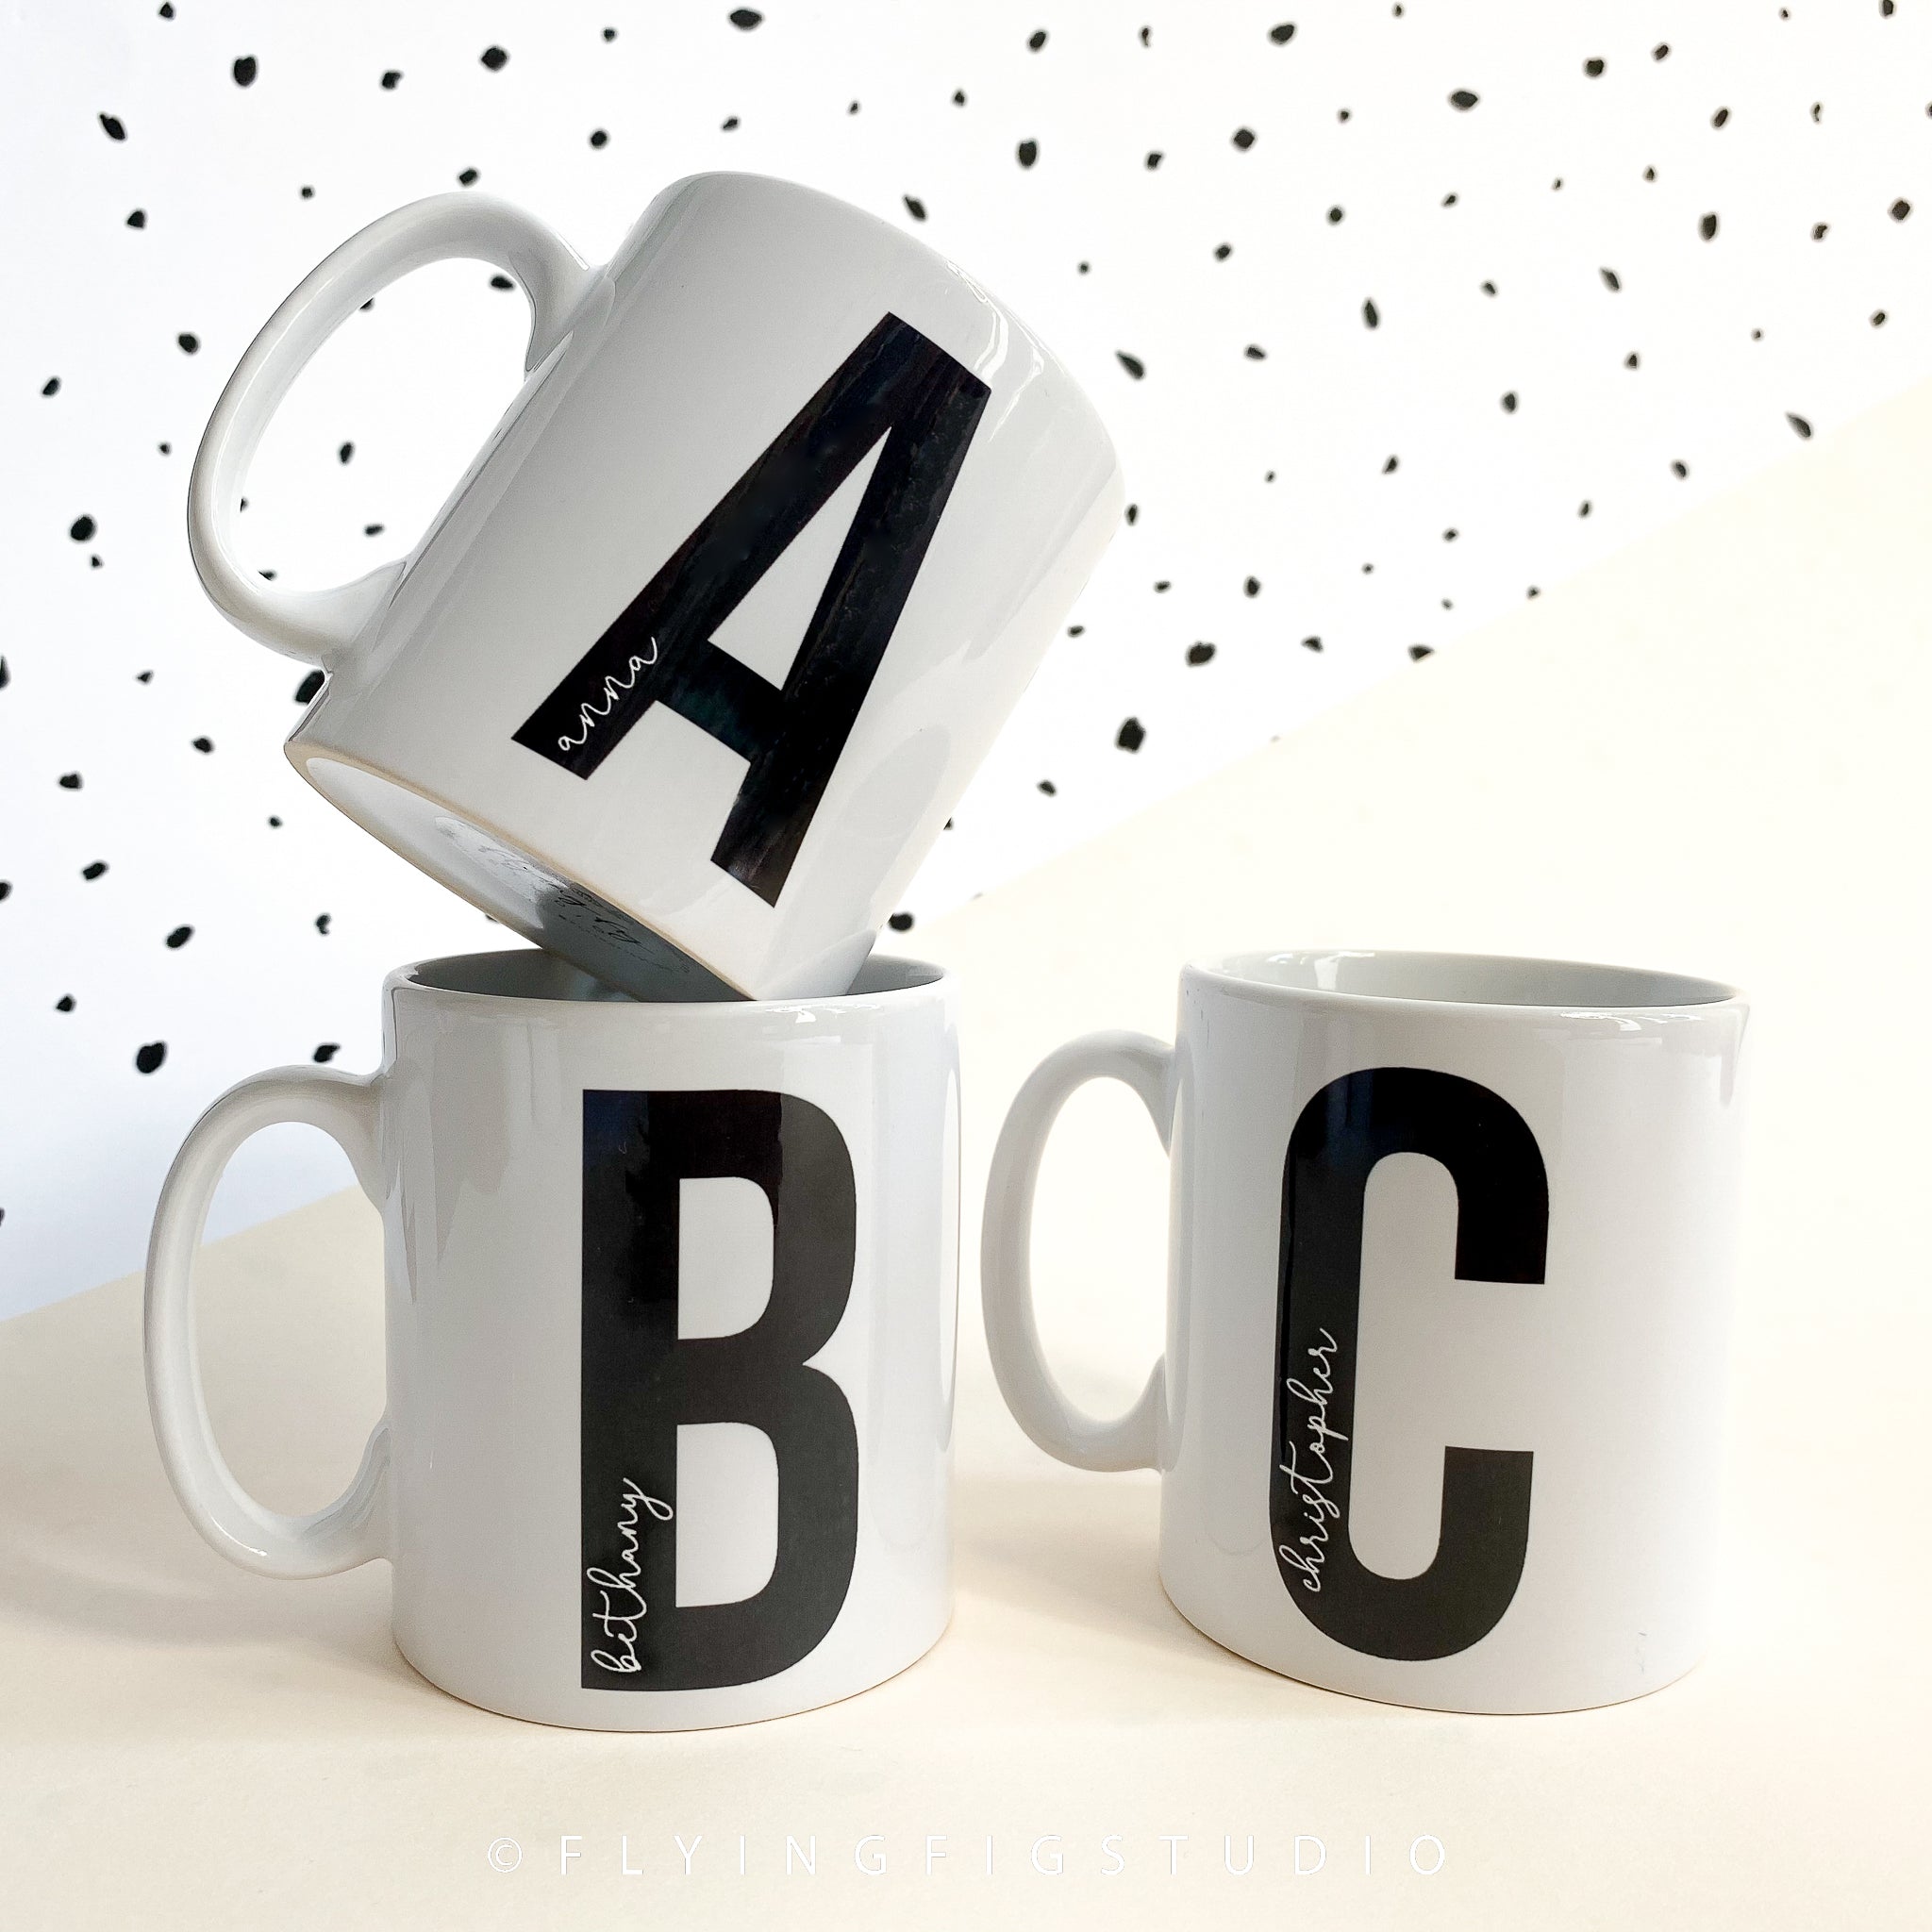 Mug A-Z Design Letters - blanc